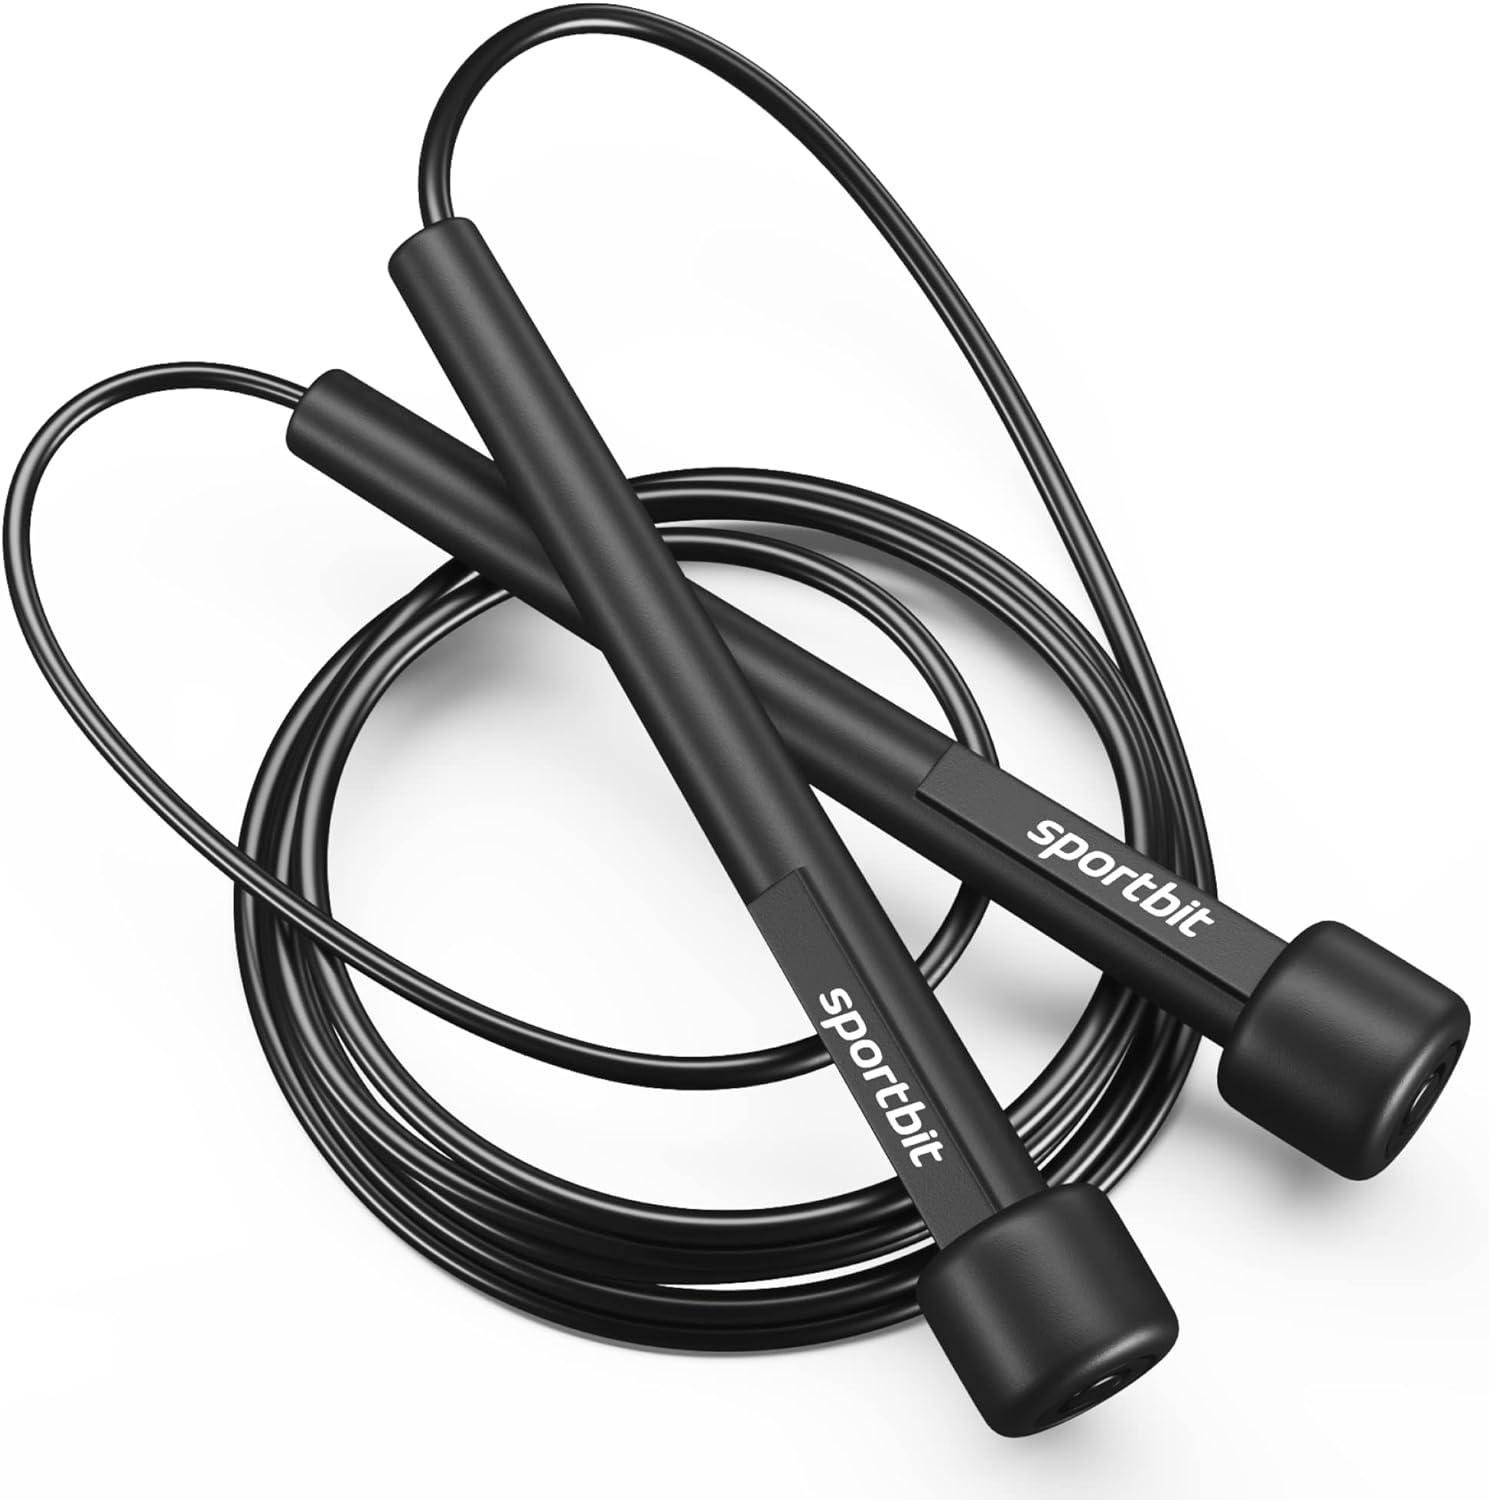 sportbit adjustable jump rope for speed skipping  sportbit b07g2dfzzg